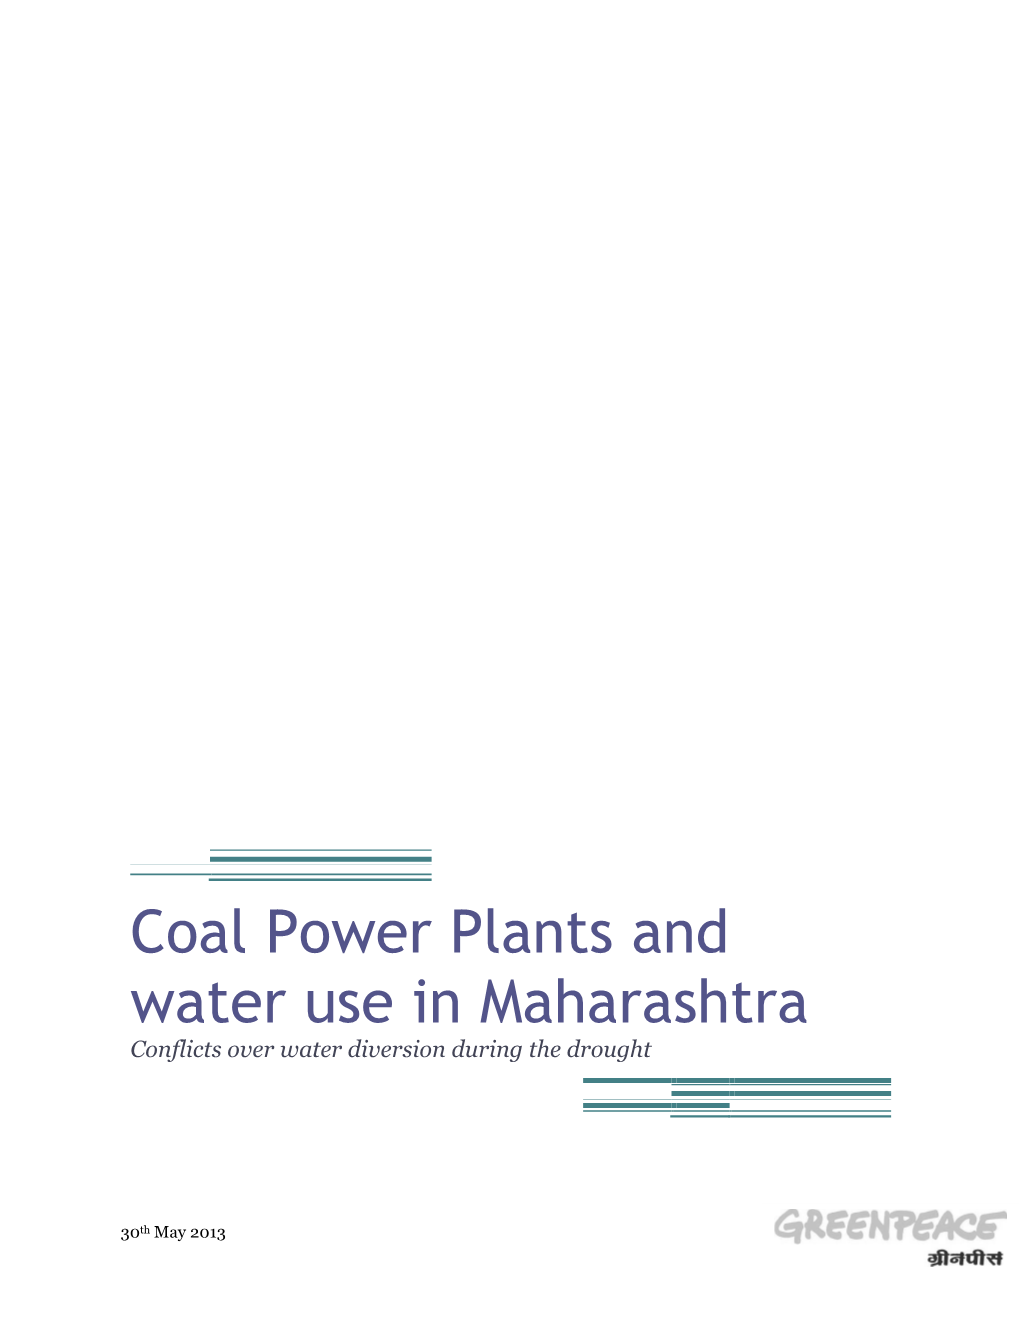 Coal Power Plants and Water Use in Maharashtra, Greenpeace, May, 2013